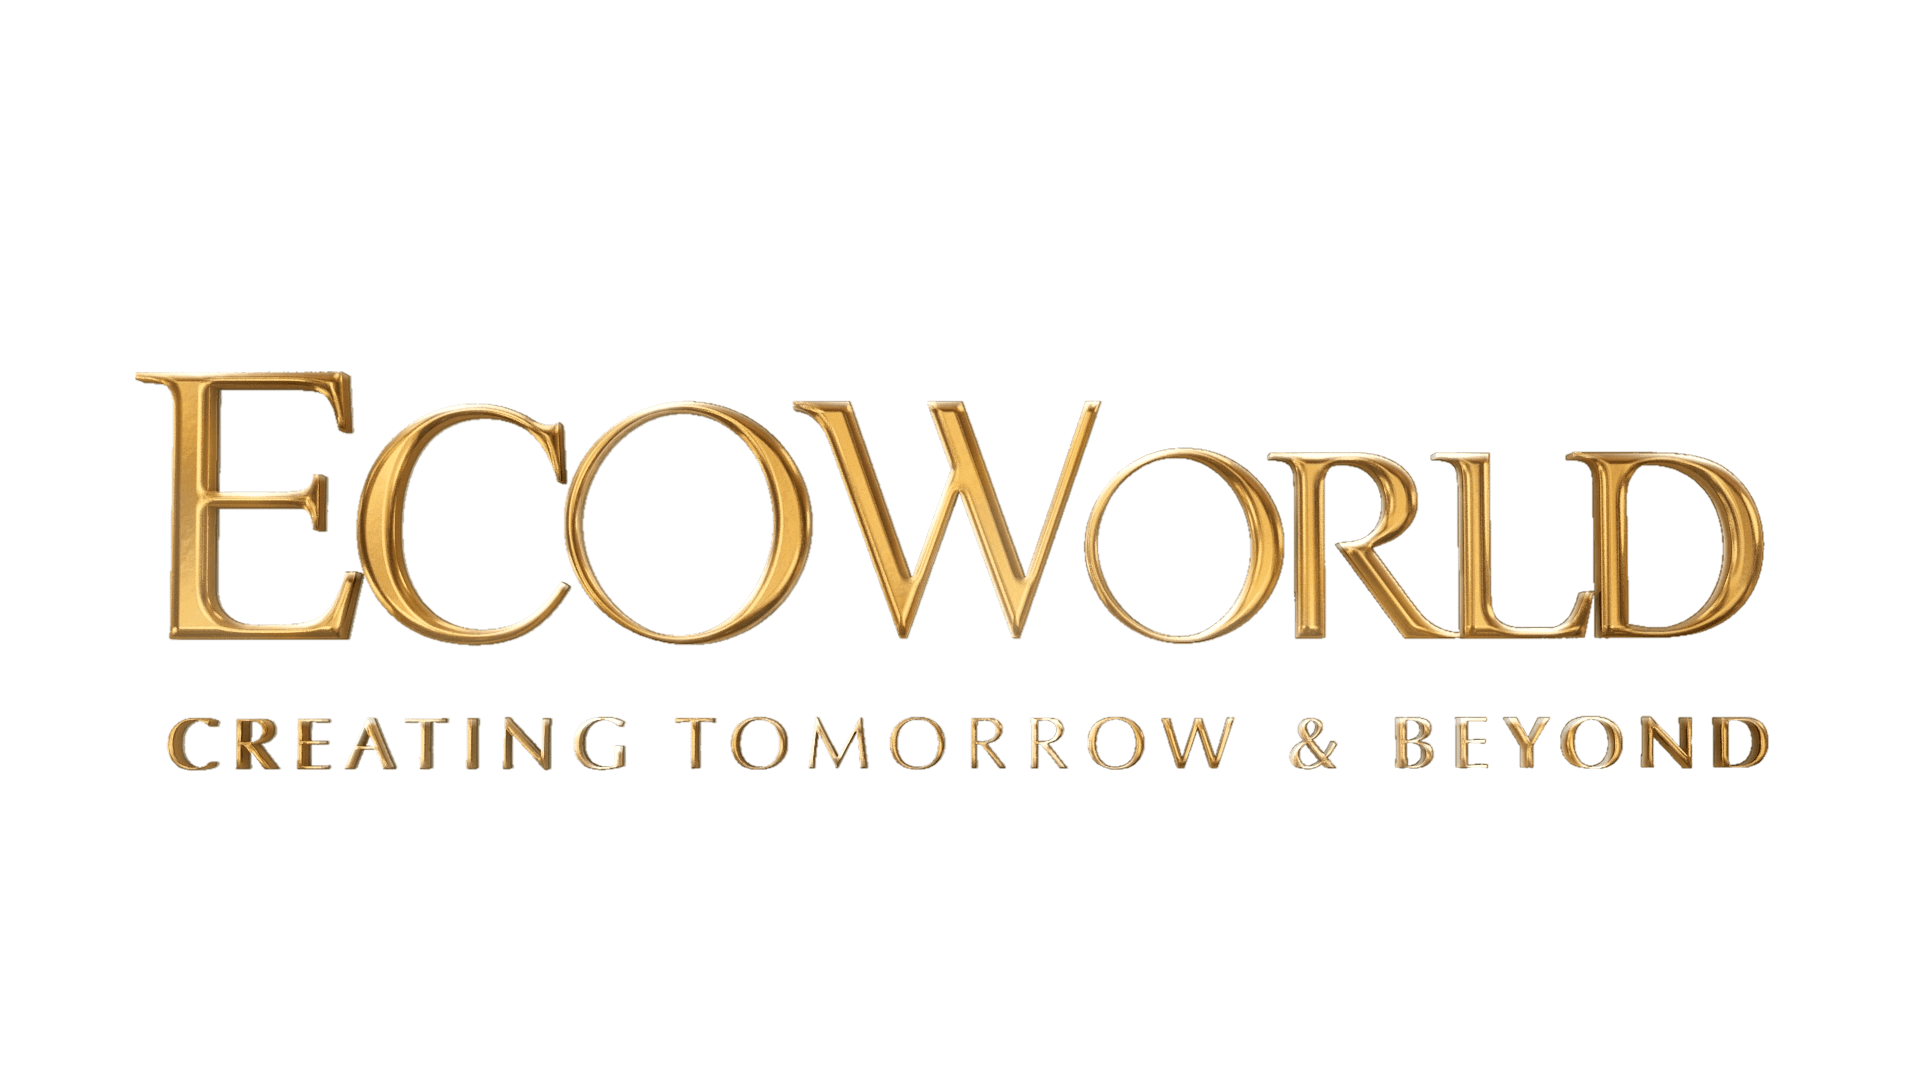 Tan World Logo - EcoWorld - Creating Tomorrow and Beyond